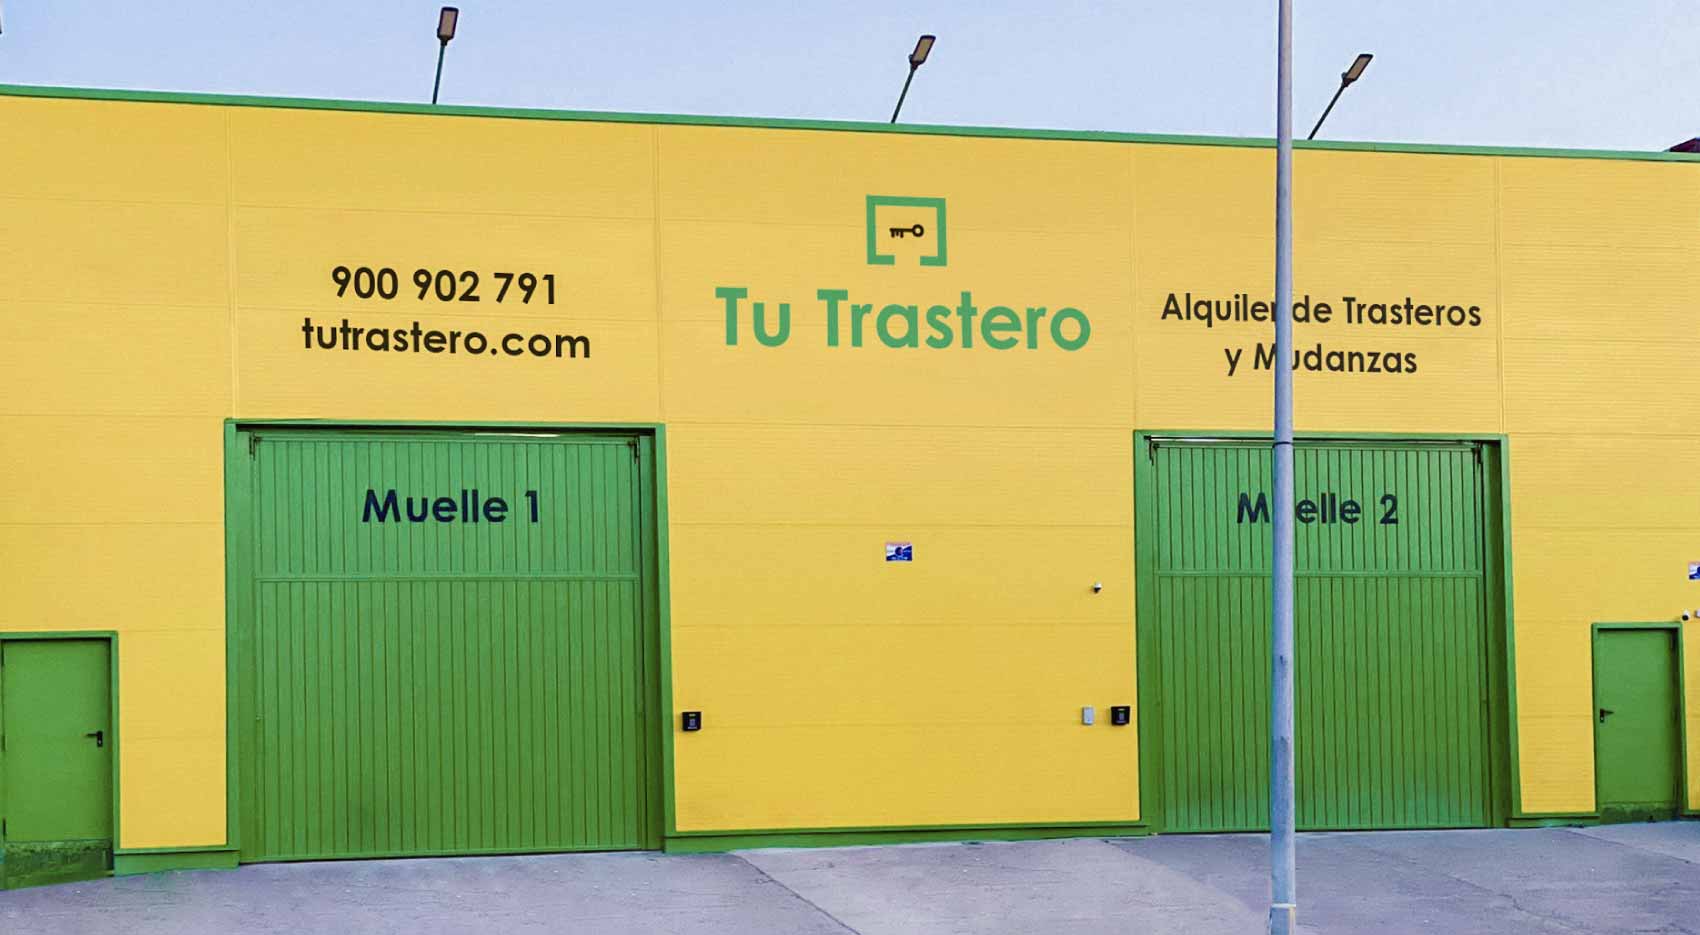 Alquiler trasteros Valladolid - Tu Trastero